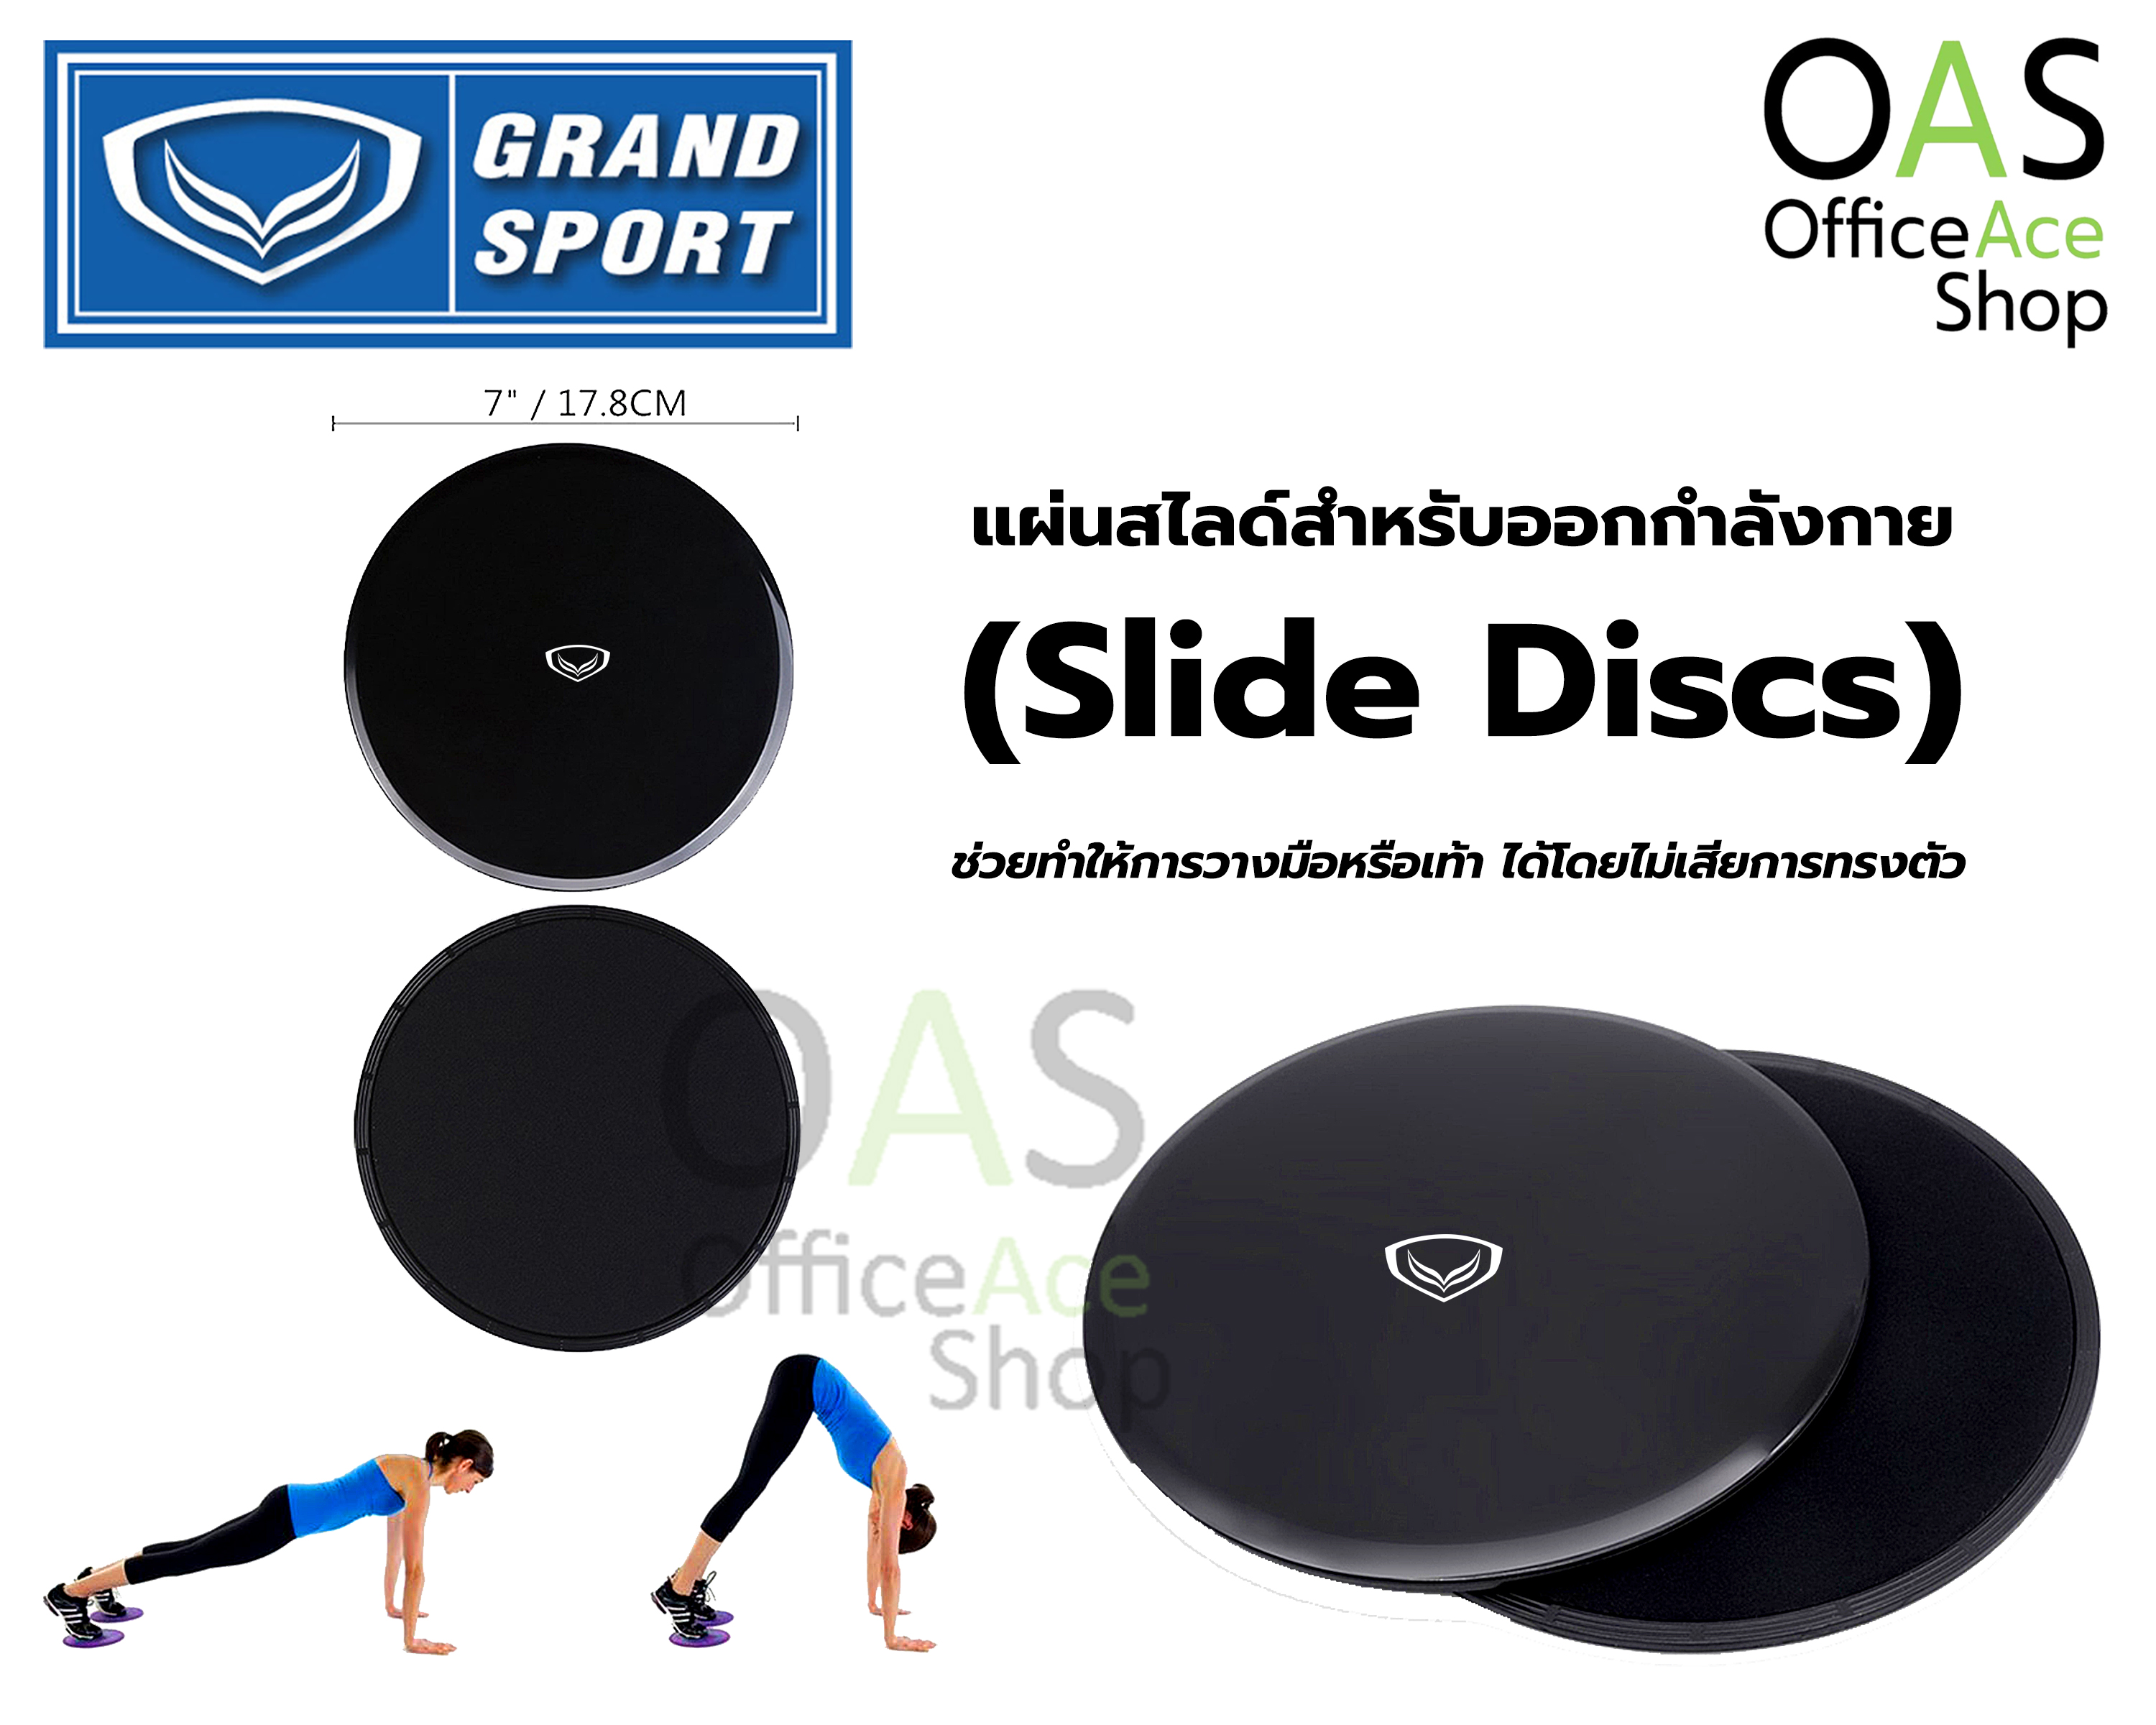 GRAND SPORT Slide Discs Fitness แผ่นสไลด์ออกกำลังกาย ฟิตเนส แกรนสปอร์ต #377070